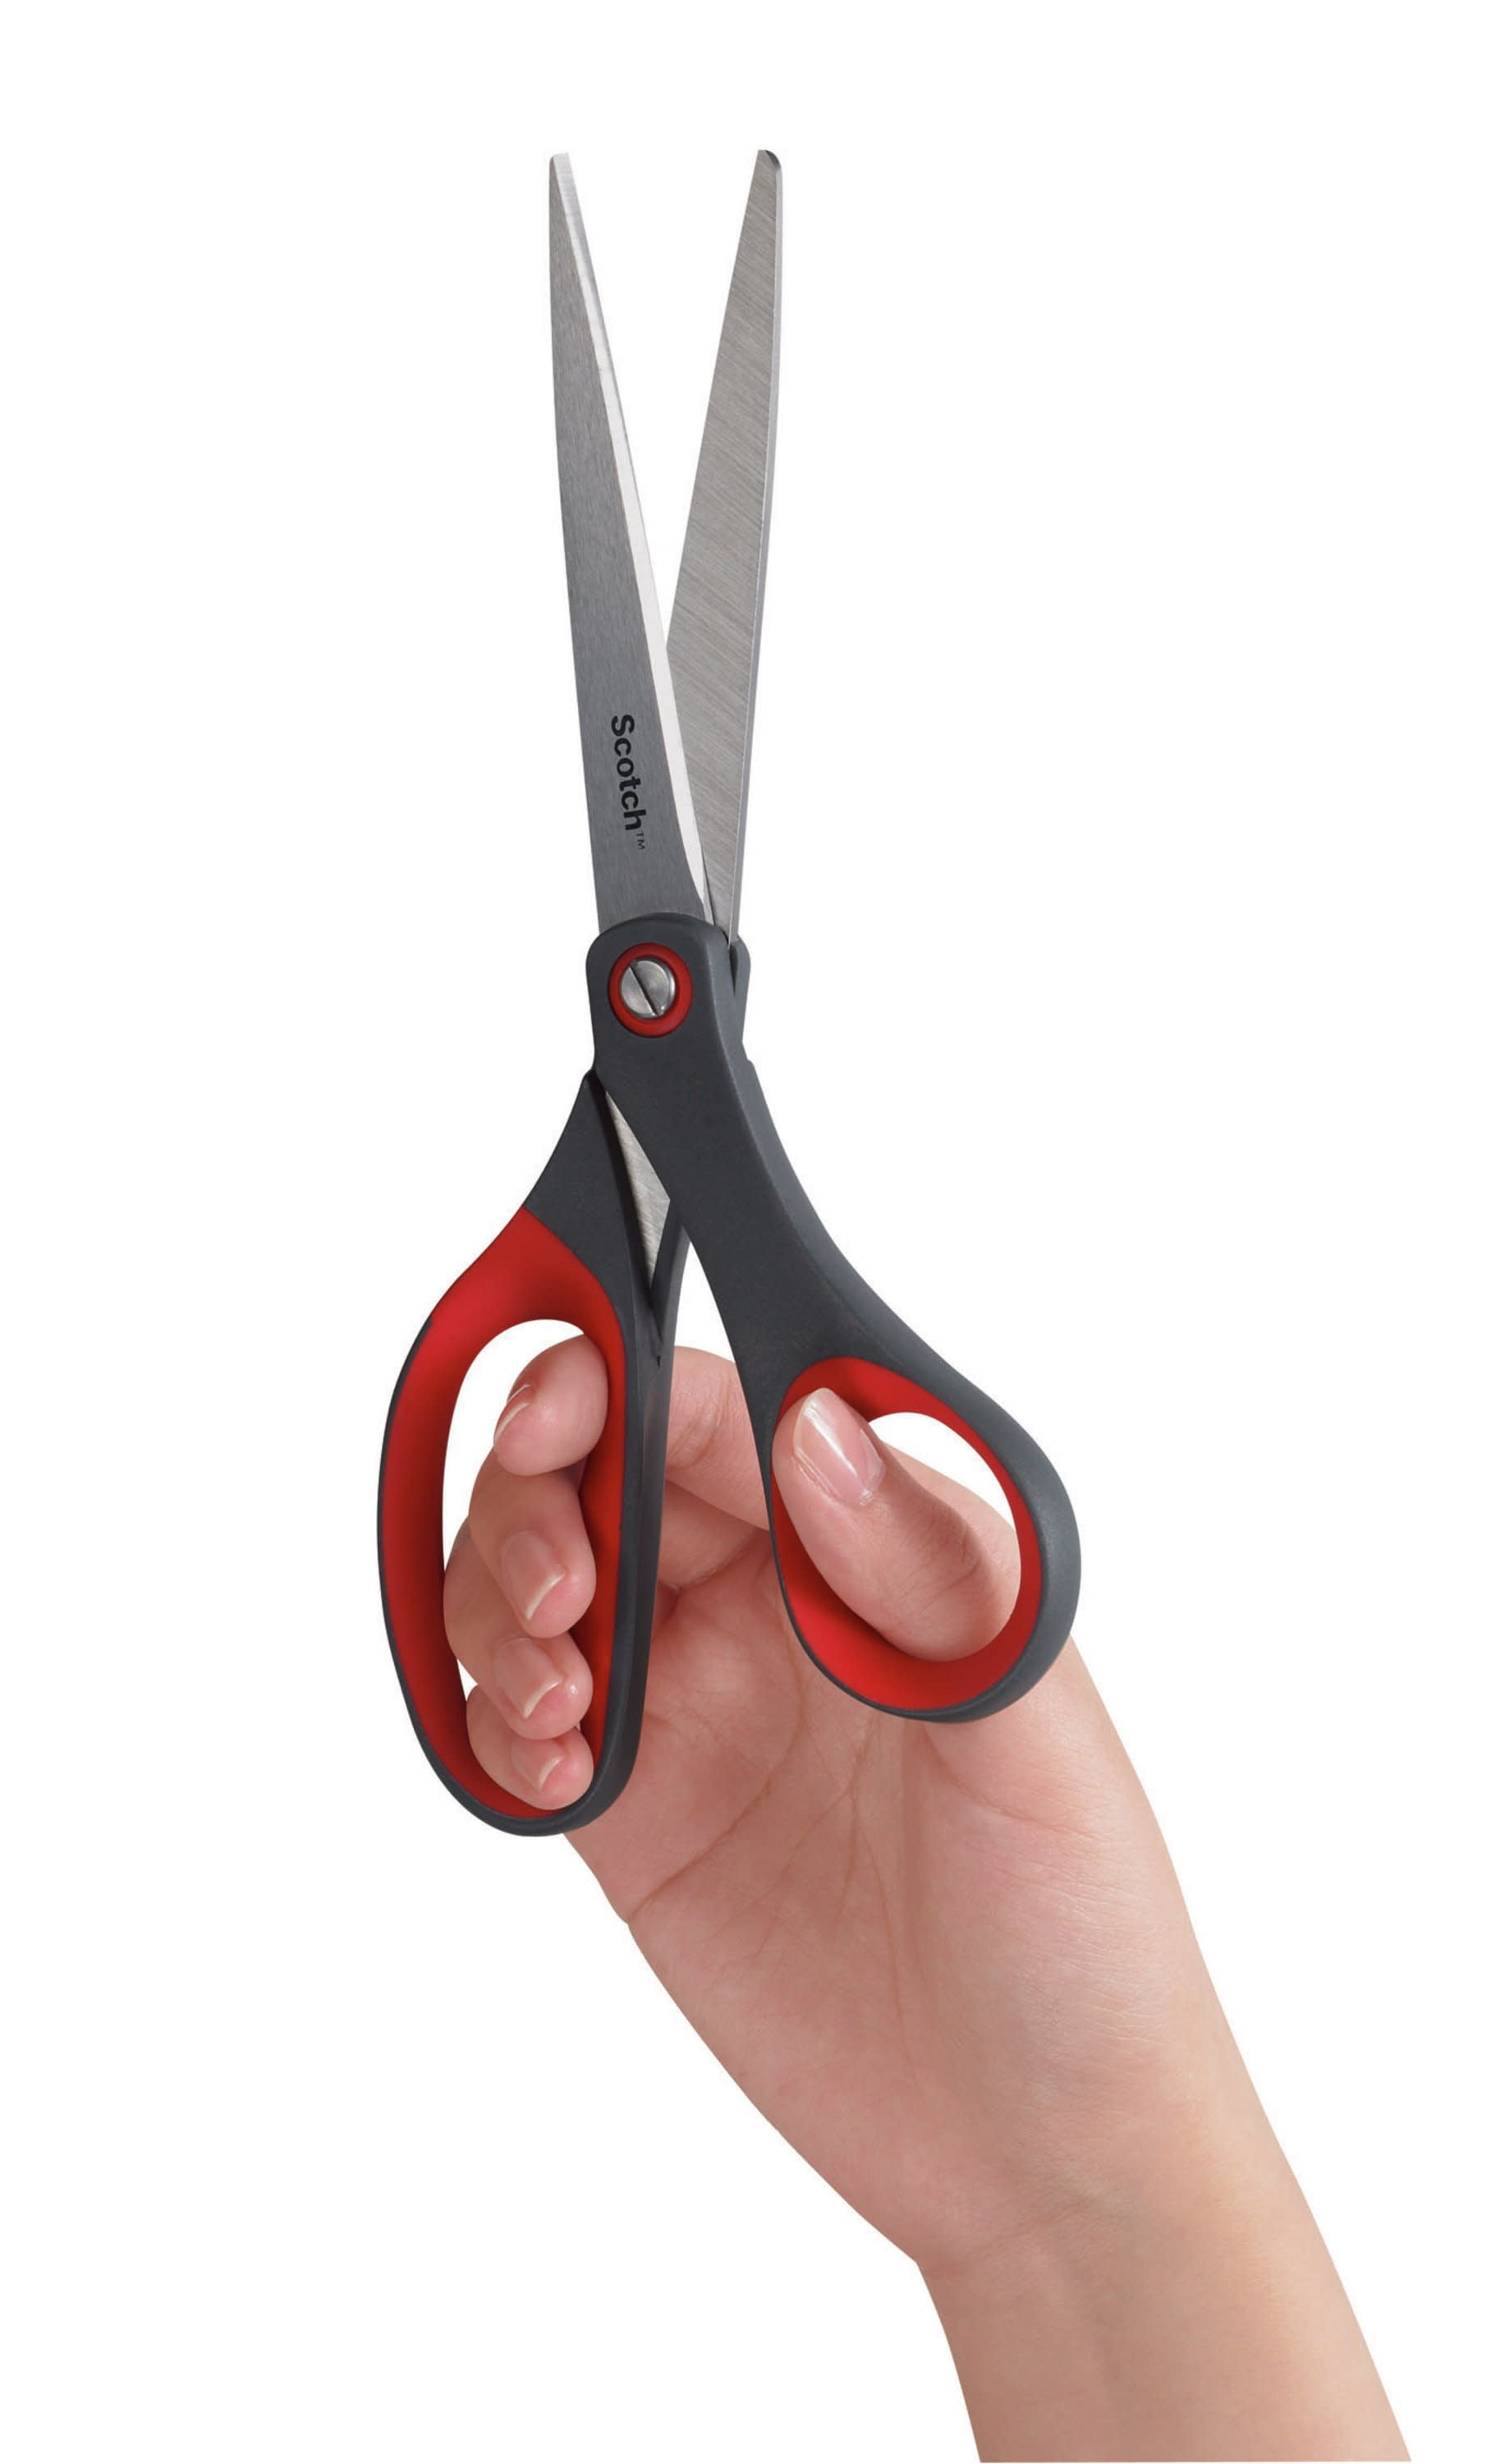 Arteza Multi-Pack Size Scissors, Stainless Steel - Set of 3